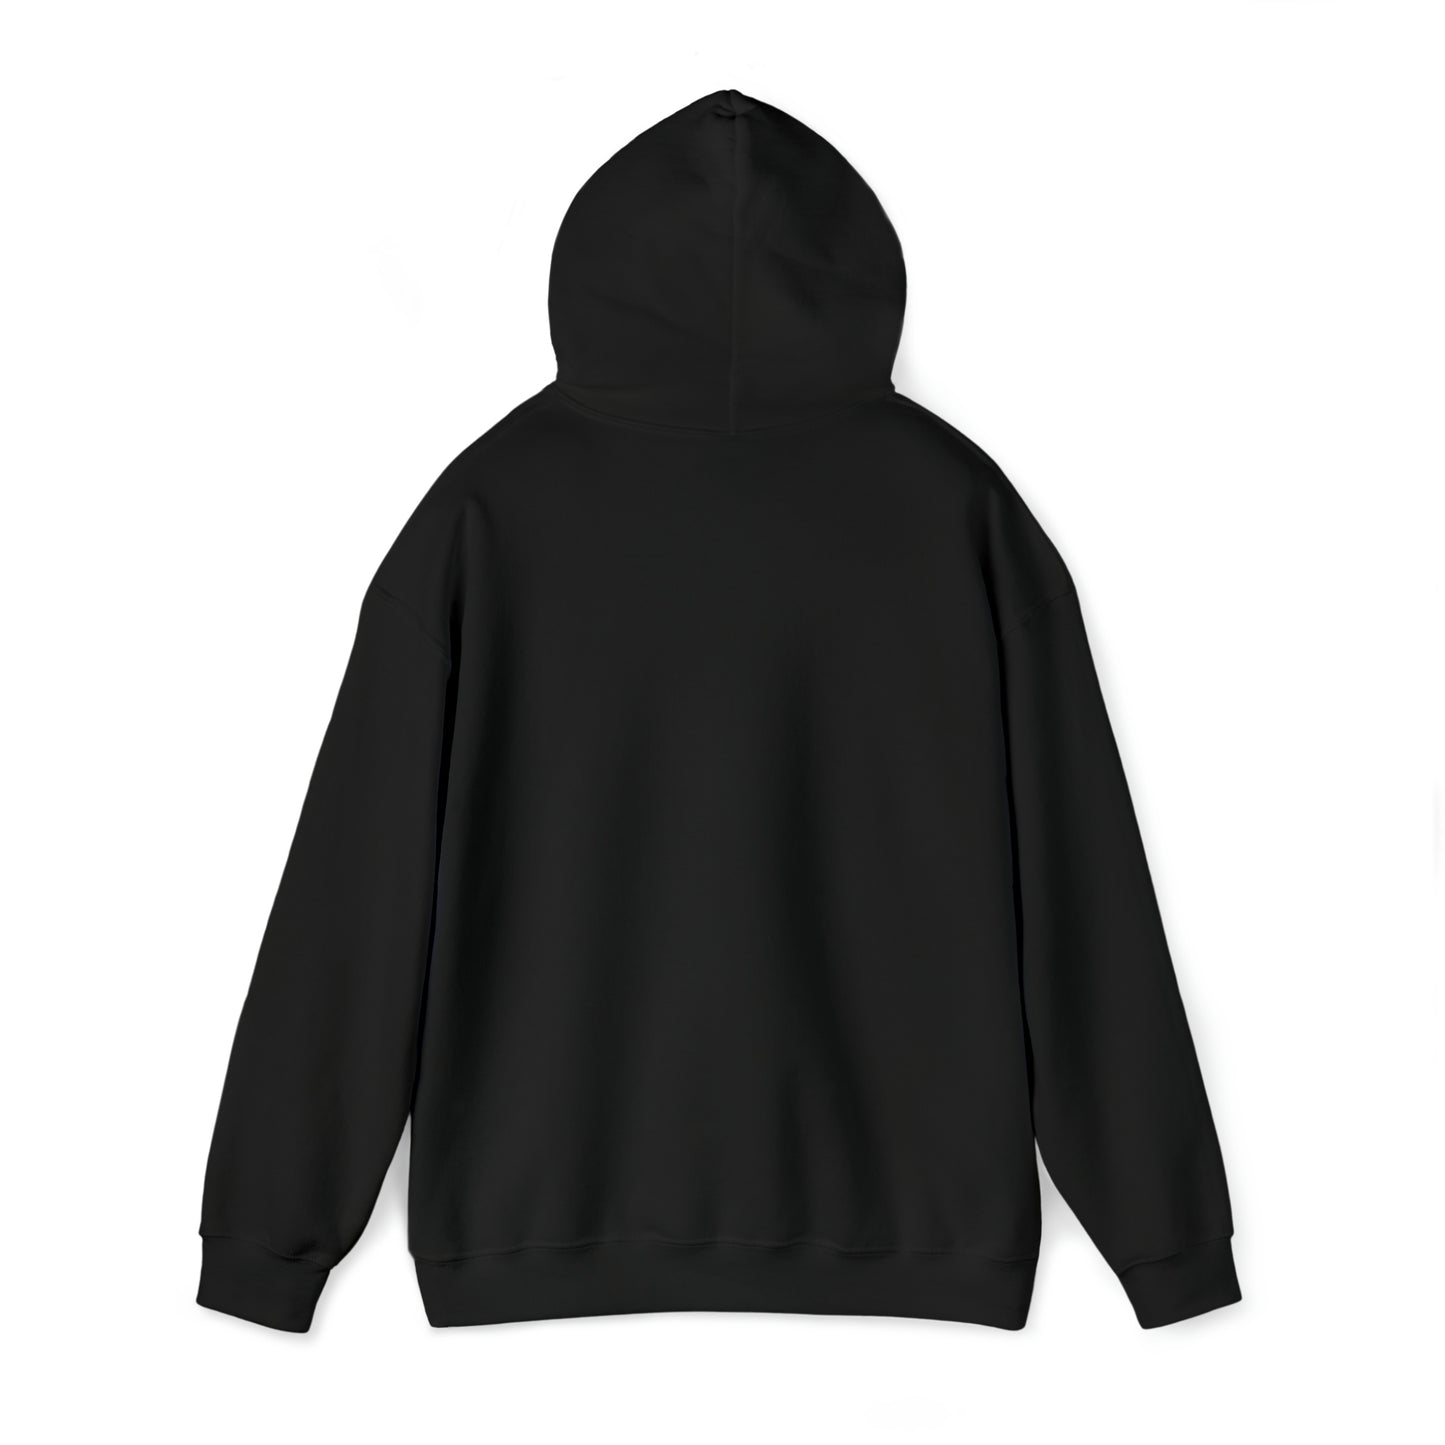 CyVision Taurus VS Everybody Unisex Heavy Blend™ Hooded Sweatshirt